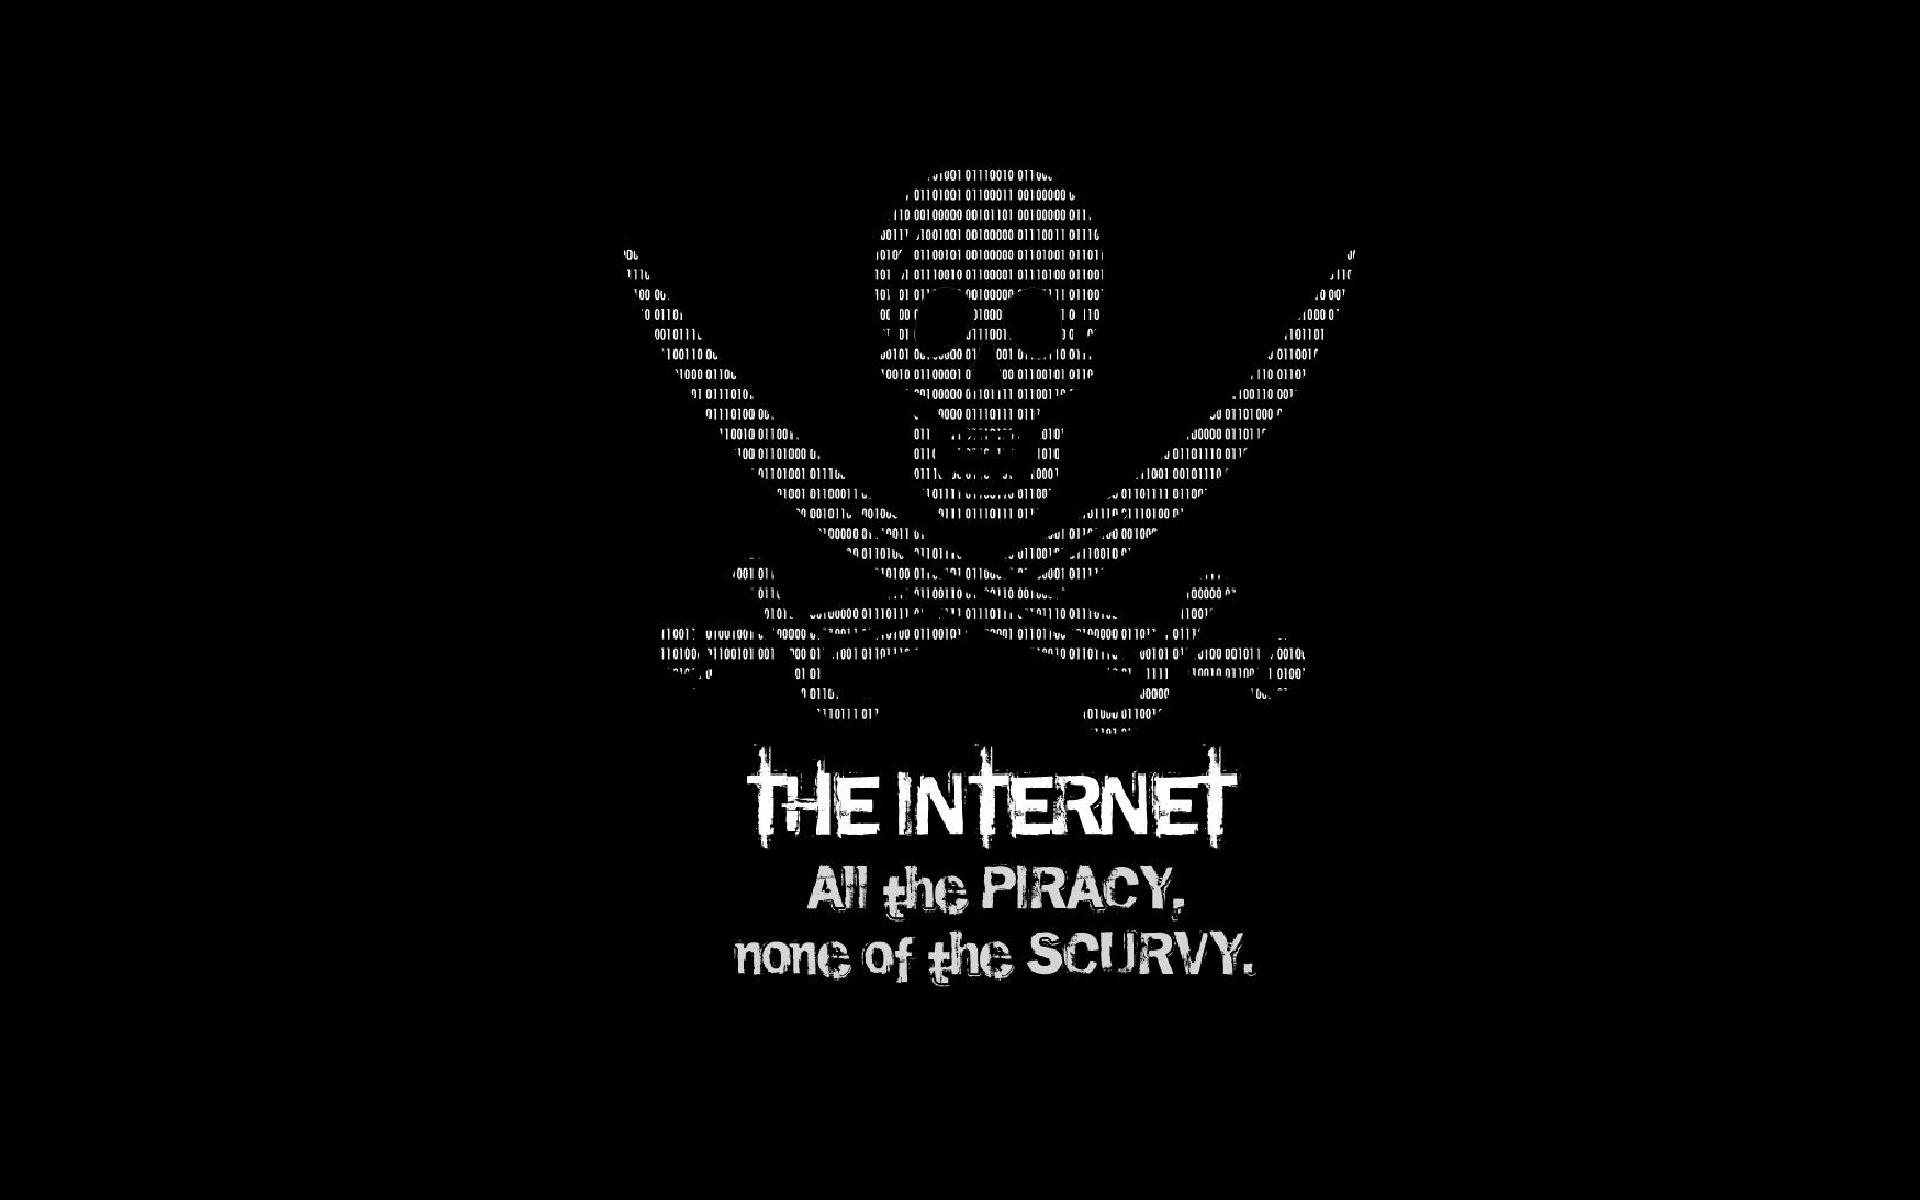 Internet, piracy, binary - desktop wallpaper